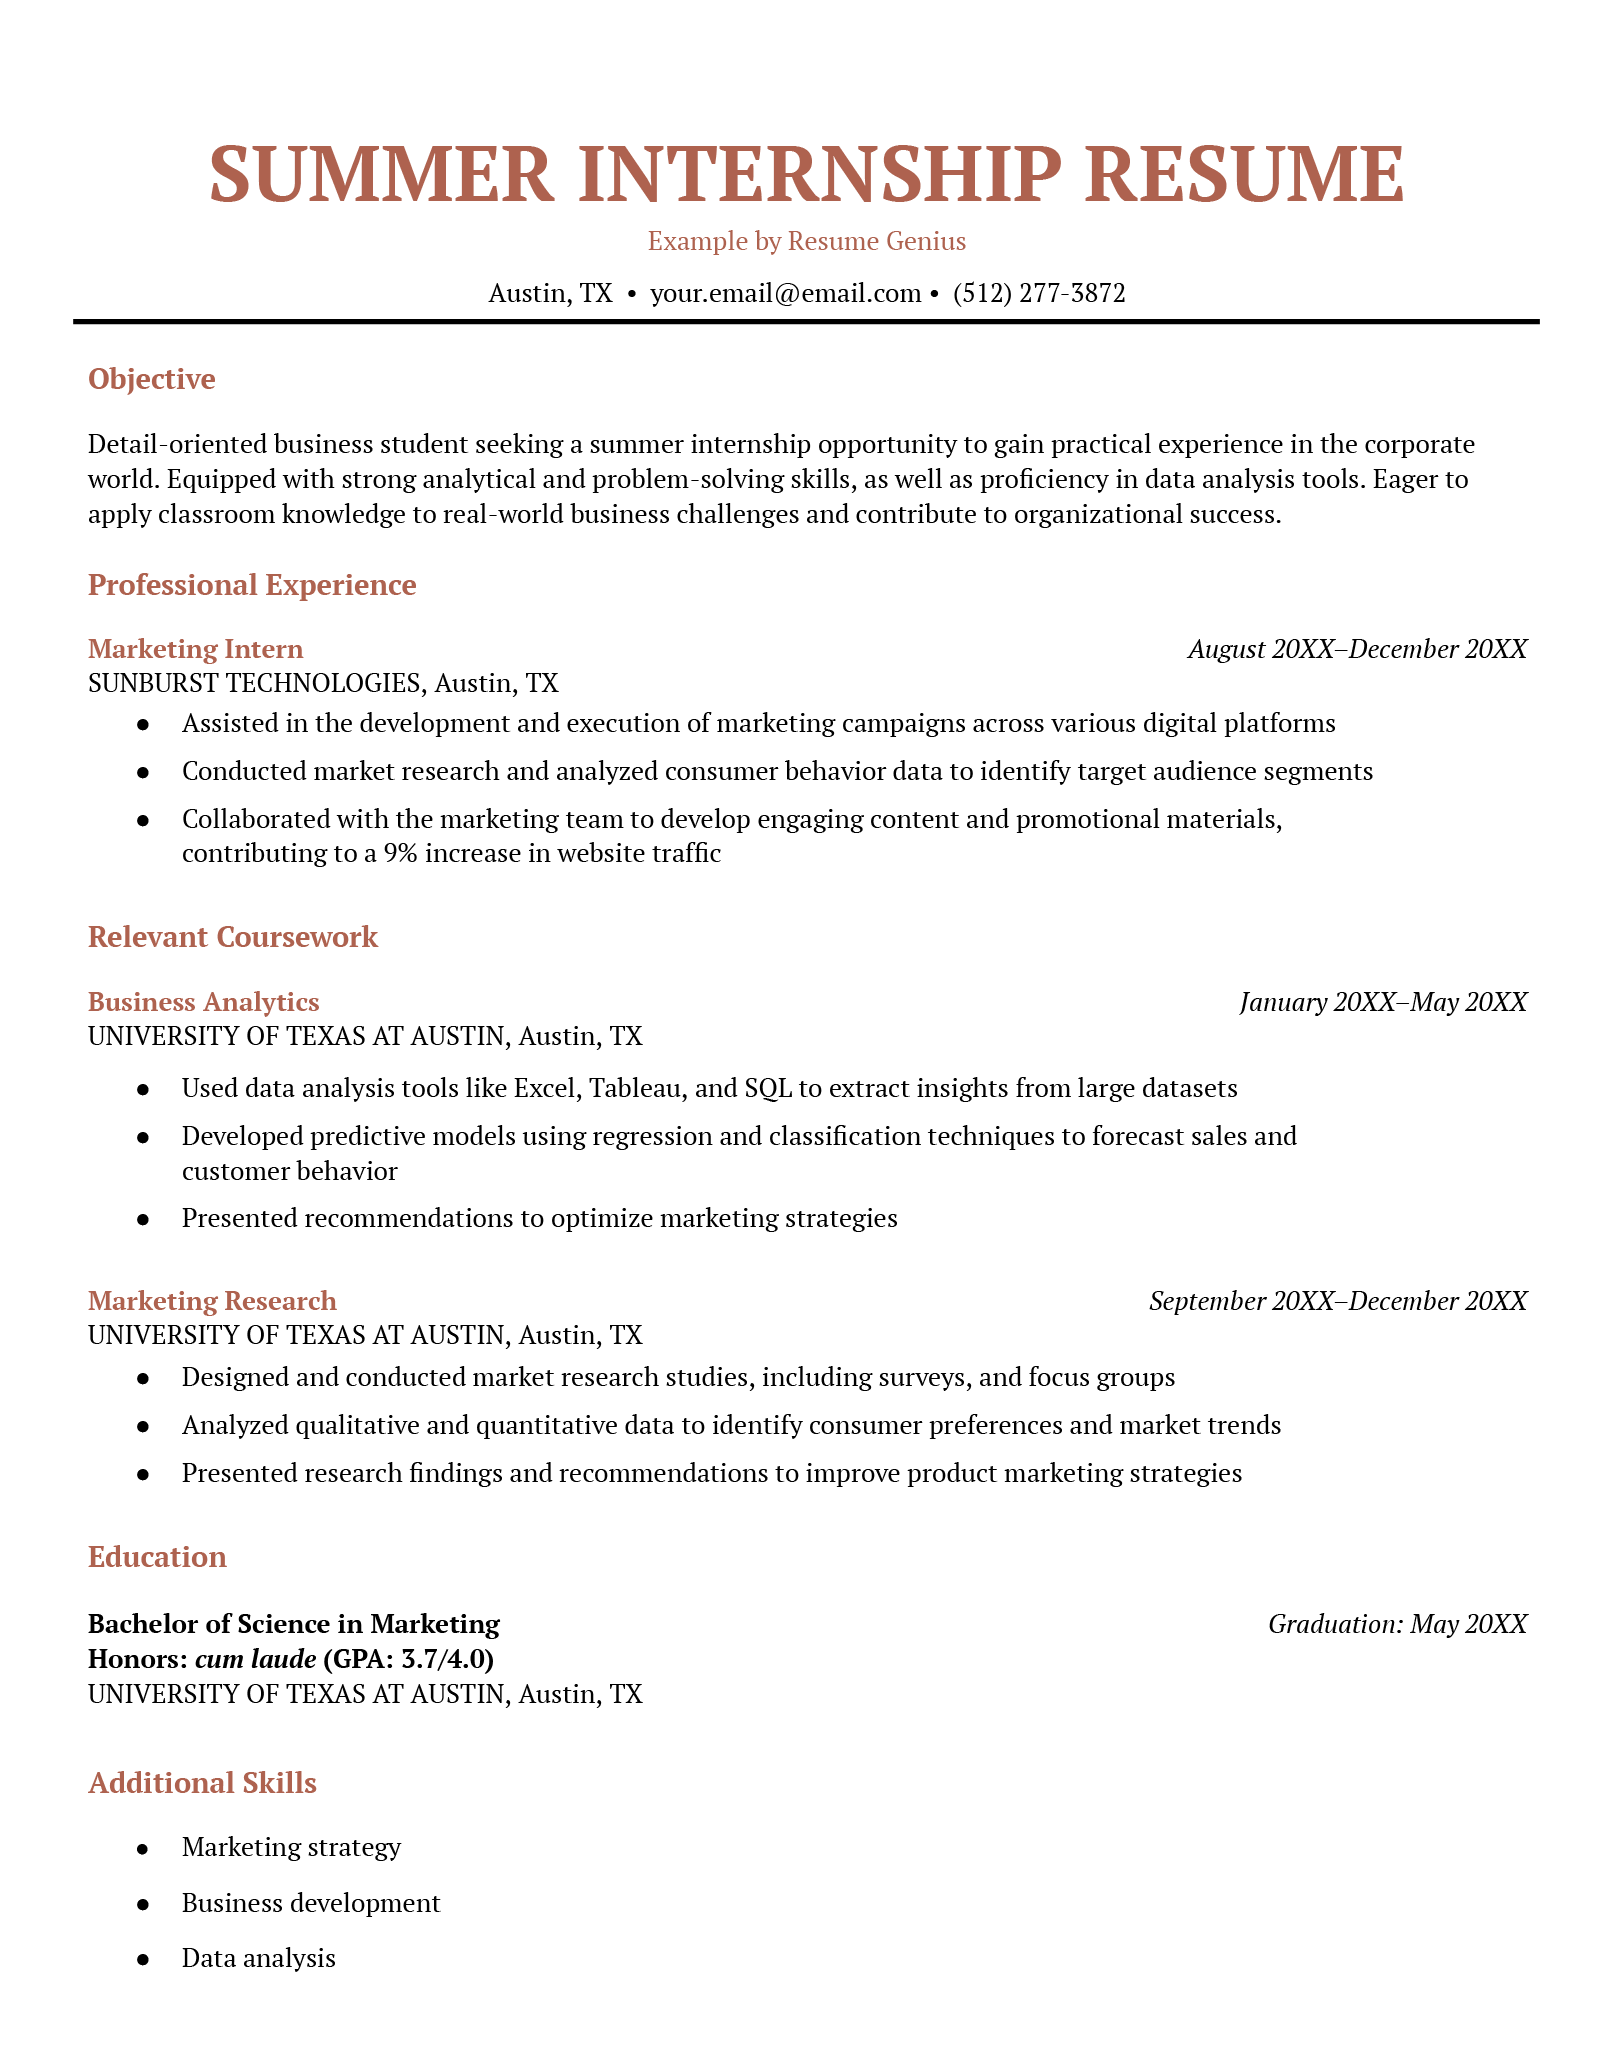 An example resume for a summer internship.